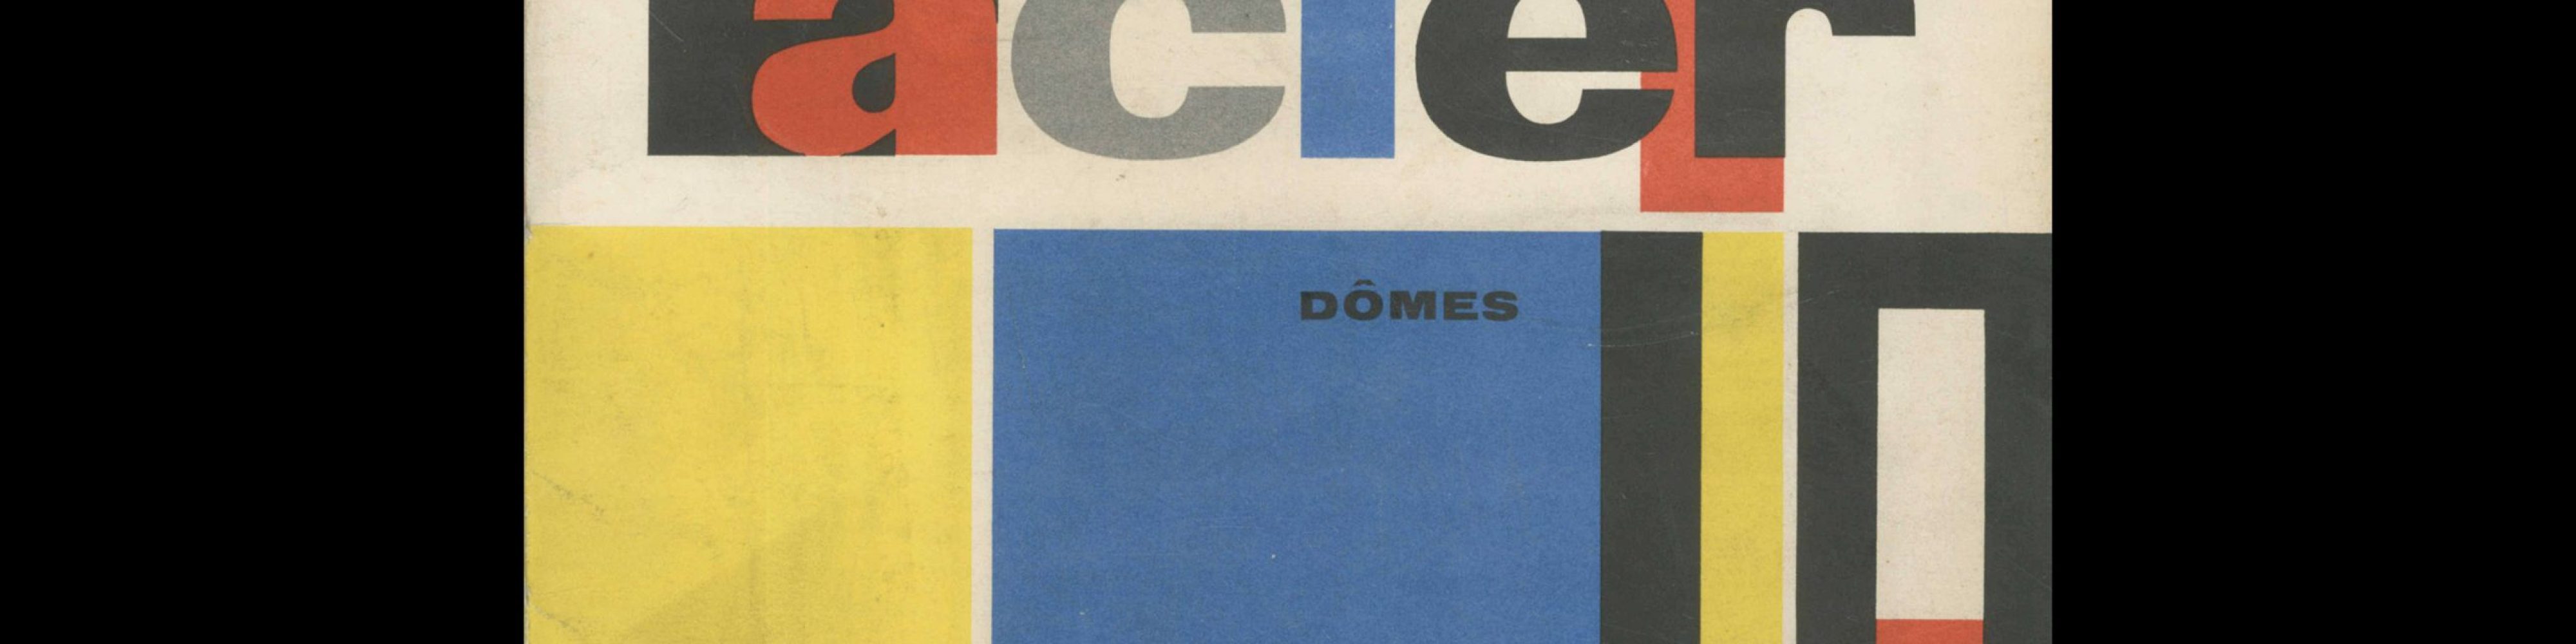 Acier, Dômes, 1959. Cover design by Jacques Nathan-Garamond